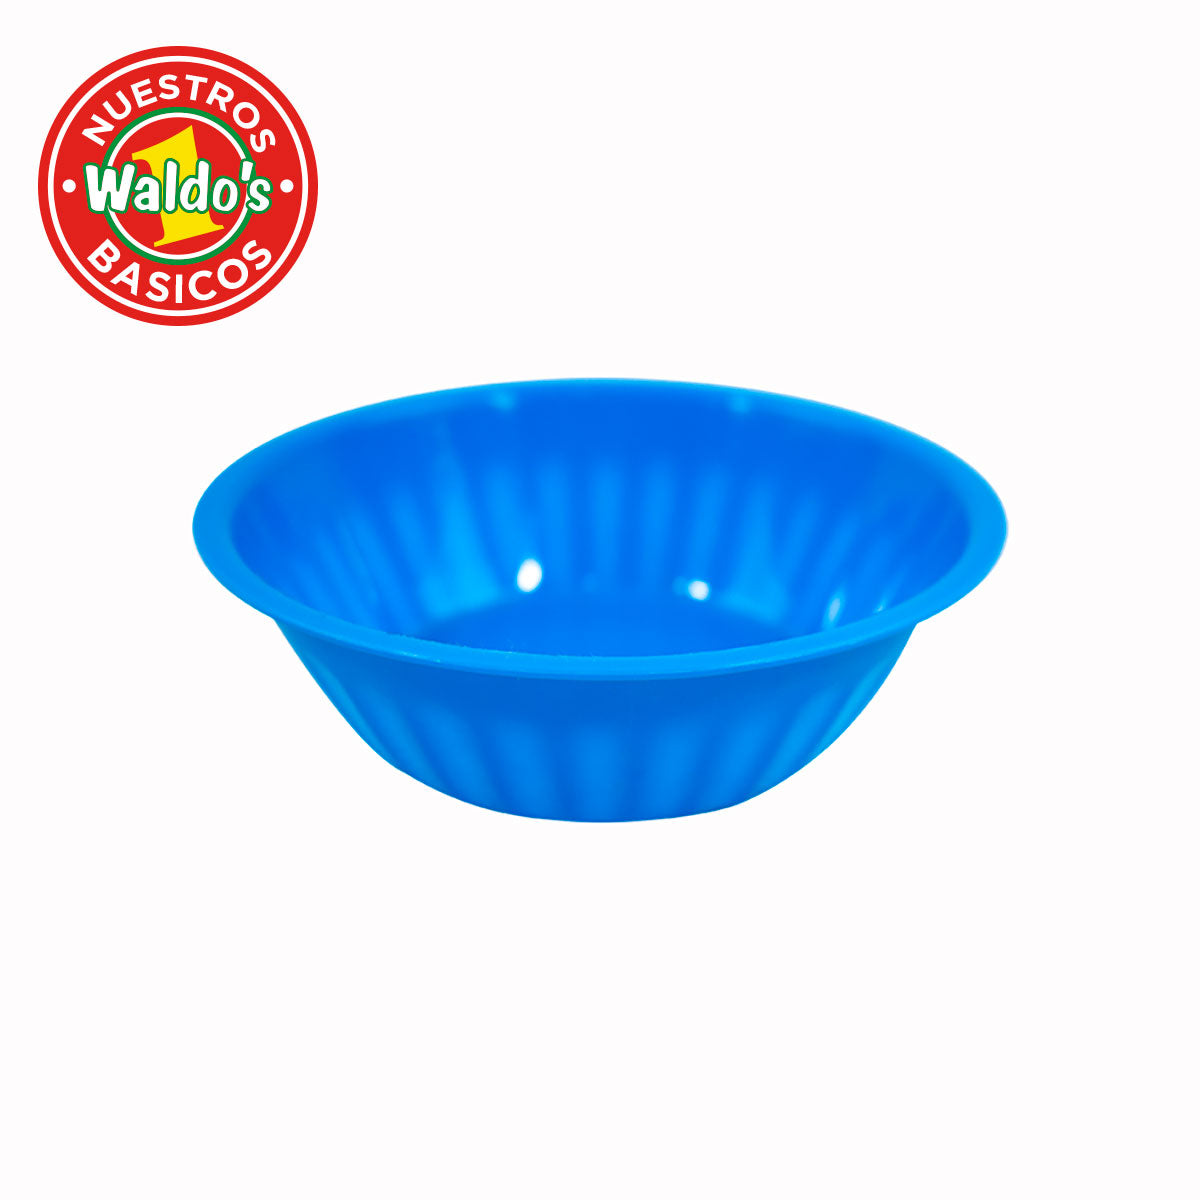 Plato de Plástico Botanero/Bowl Color Azul – Waldo's